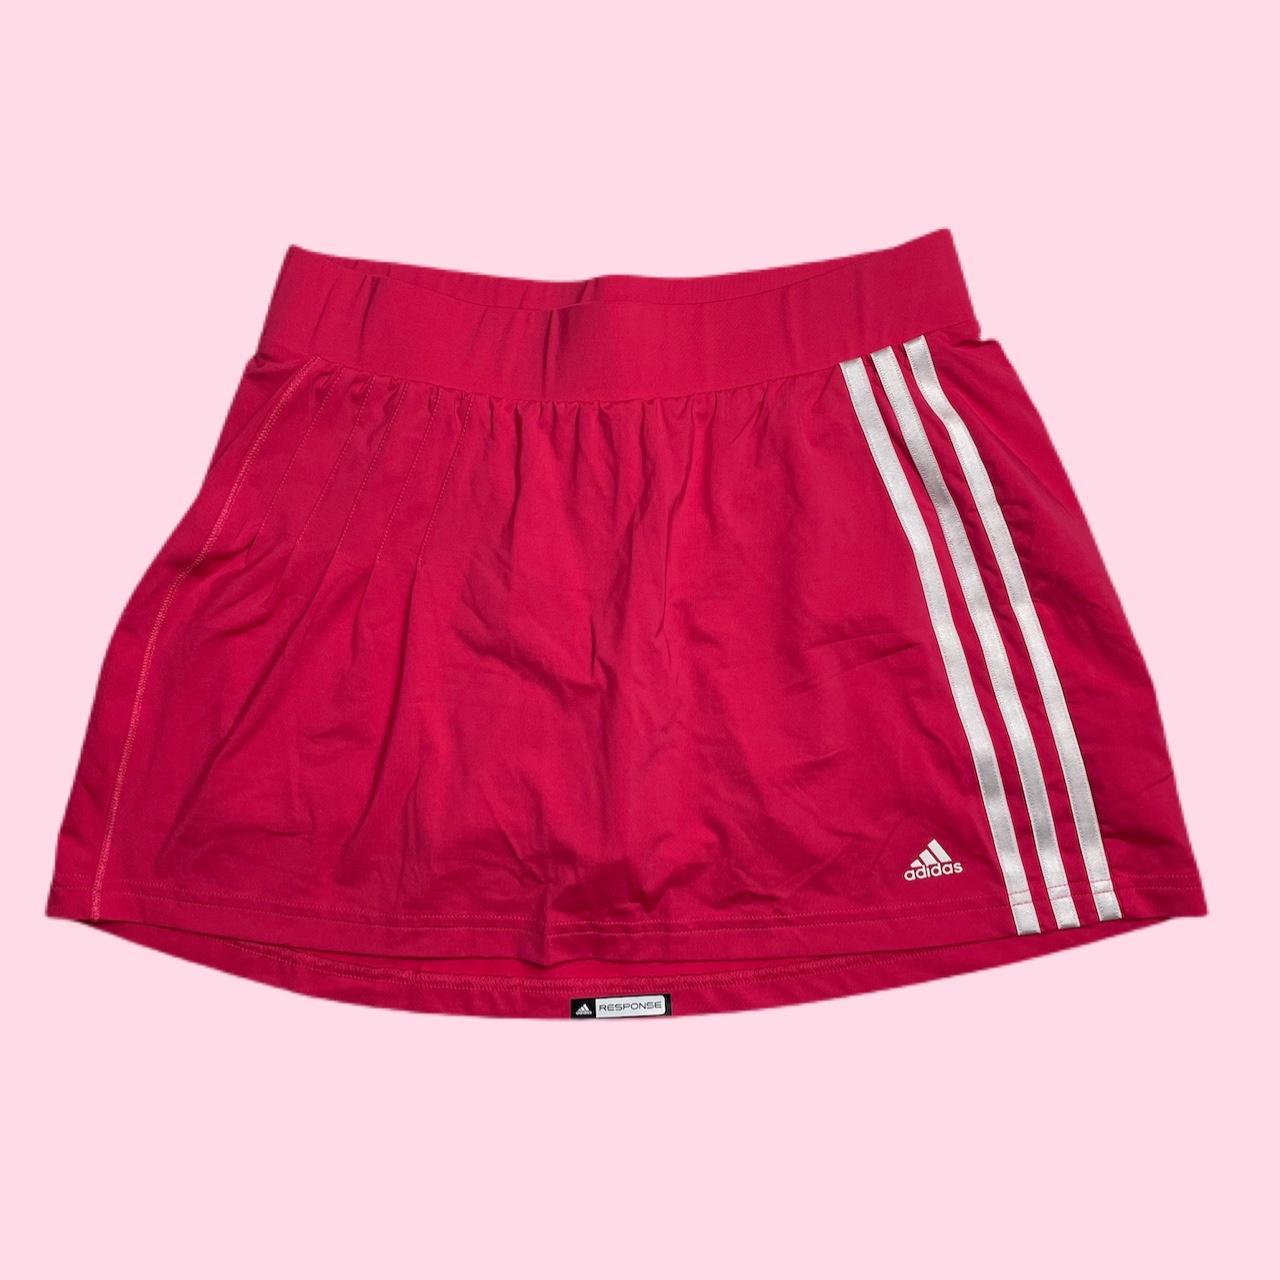 Adidas Women's Pink and White Skirt | Depop